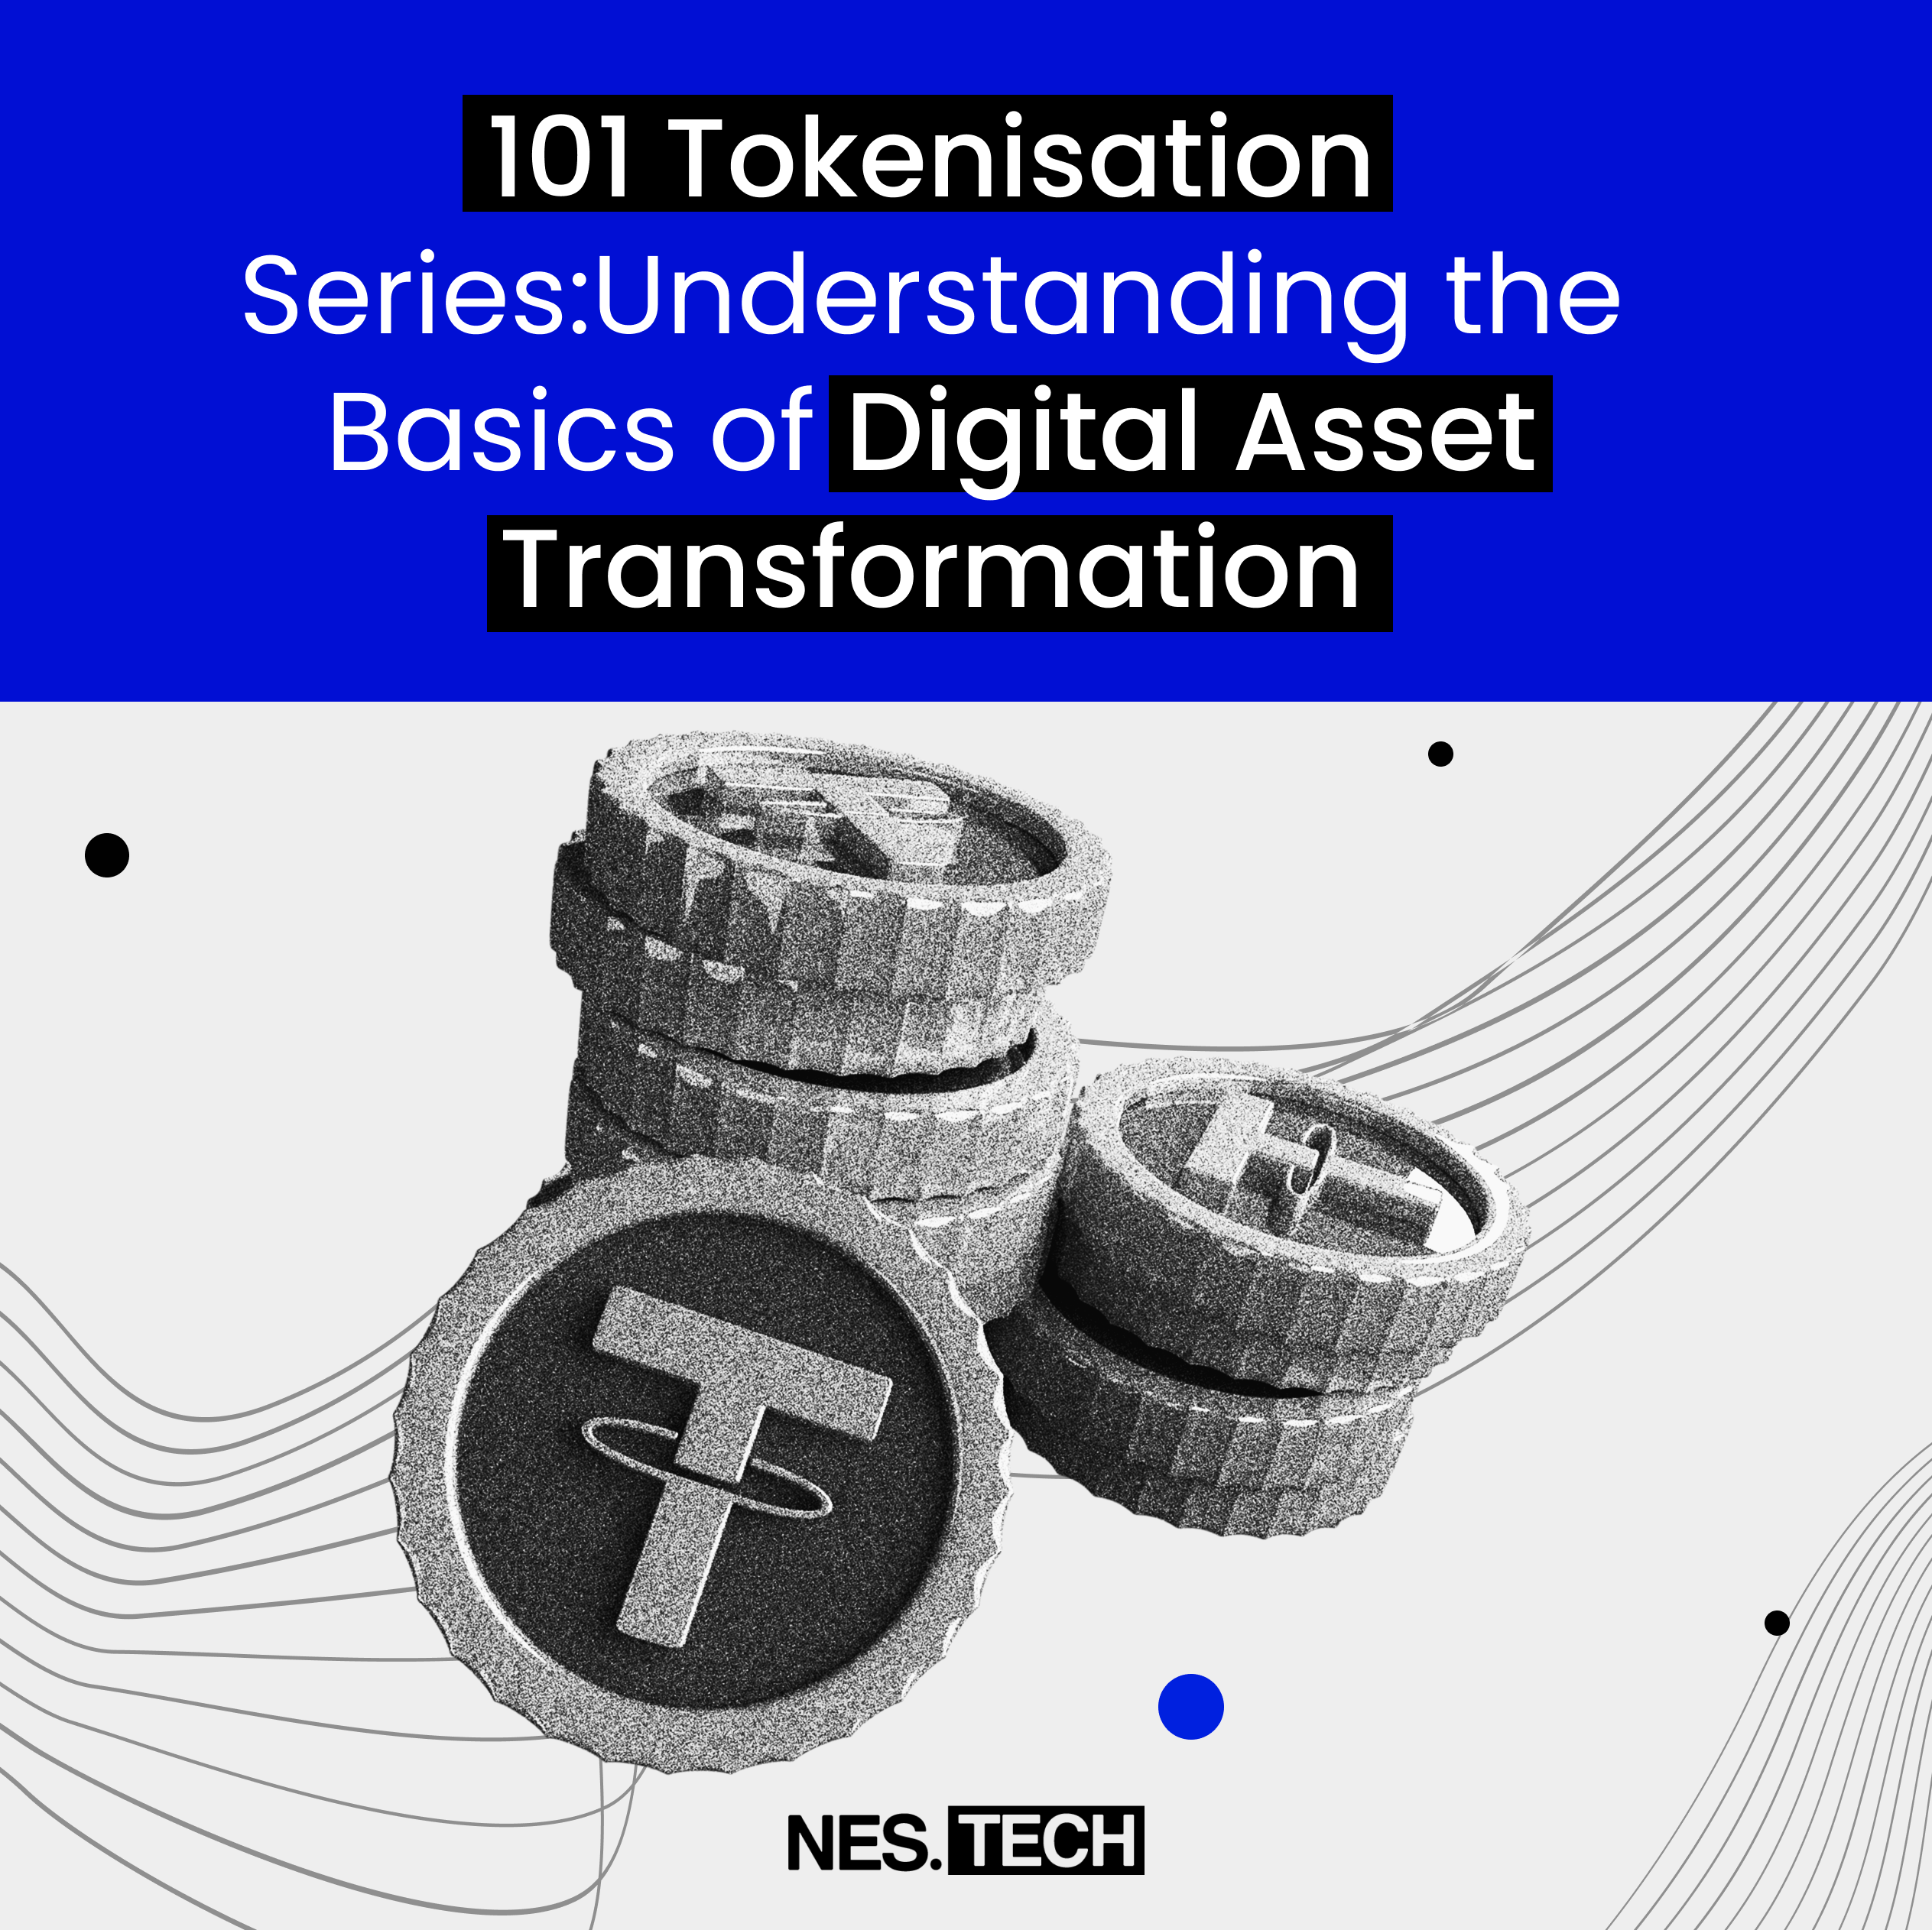 Tokenization 101: The Basics Of Digital Asset Transformation